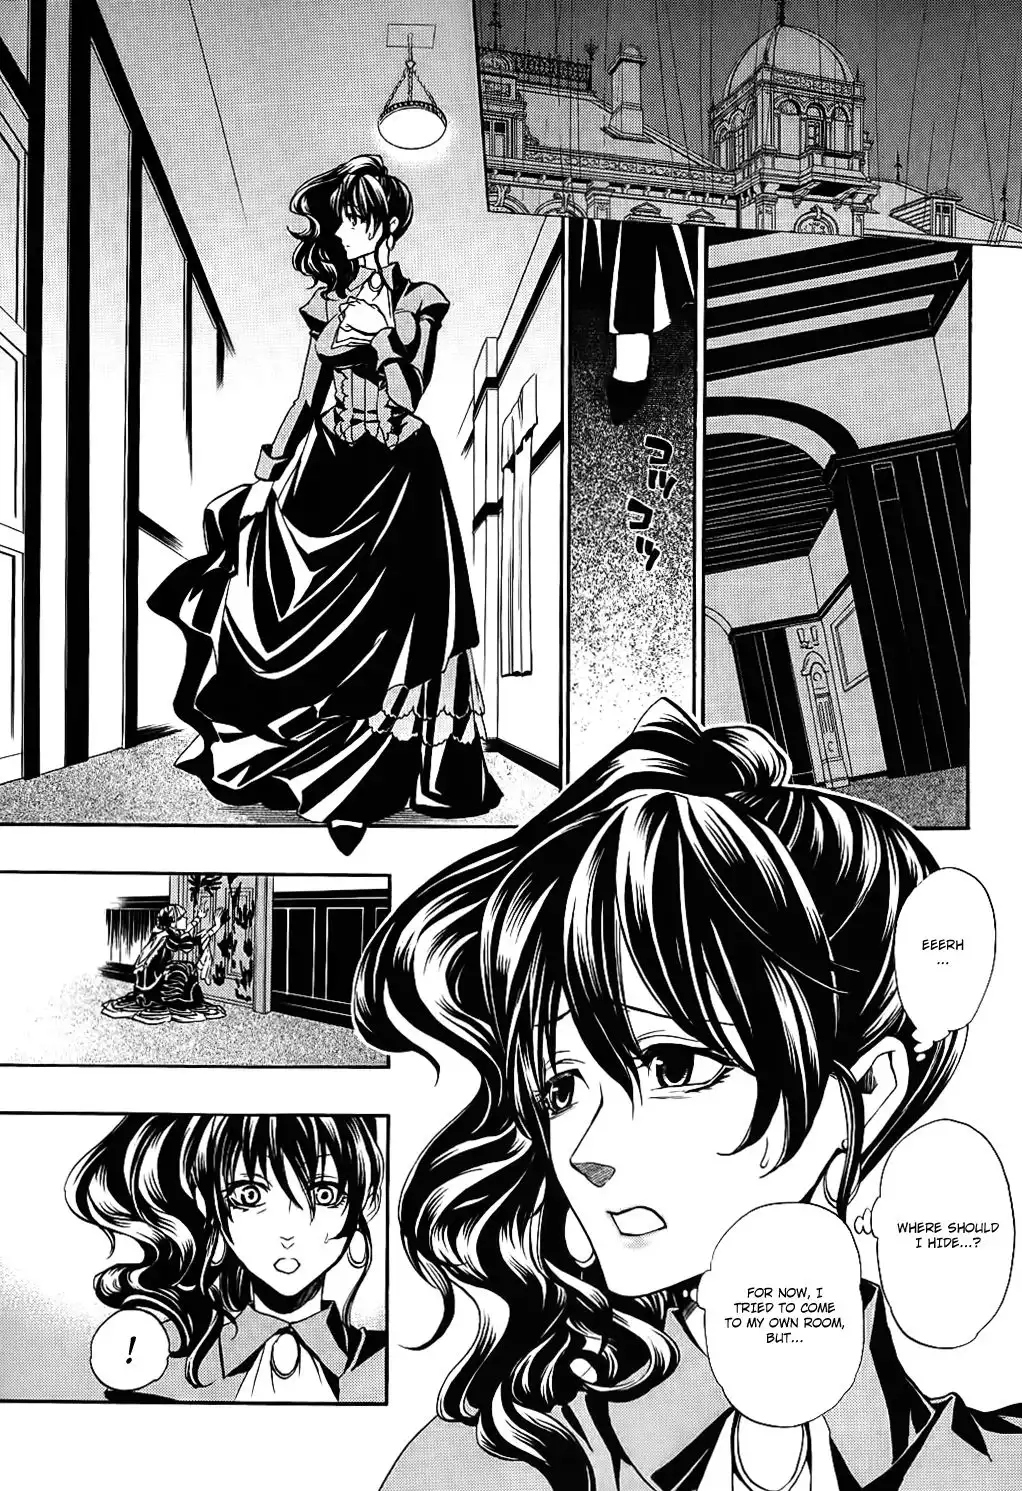 Umineko no Naku Koro ni Chiru Episode 8: Twilight of the Golden Witch Chapter 6